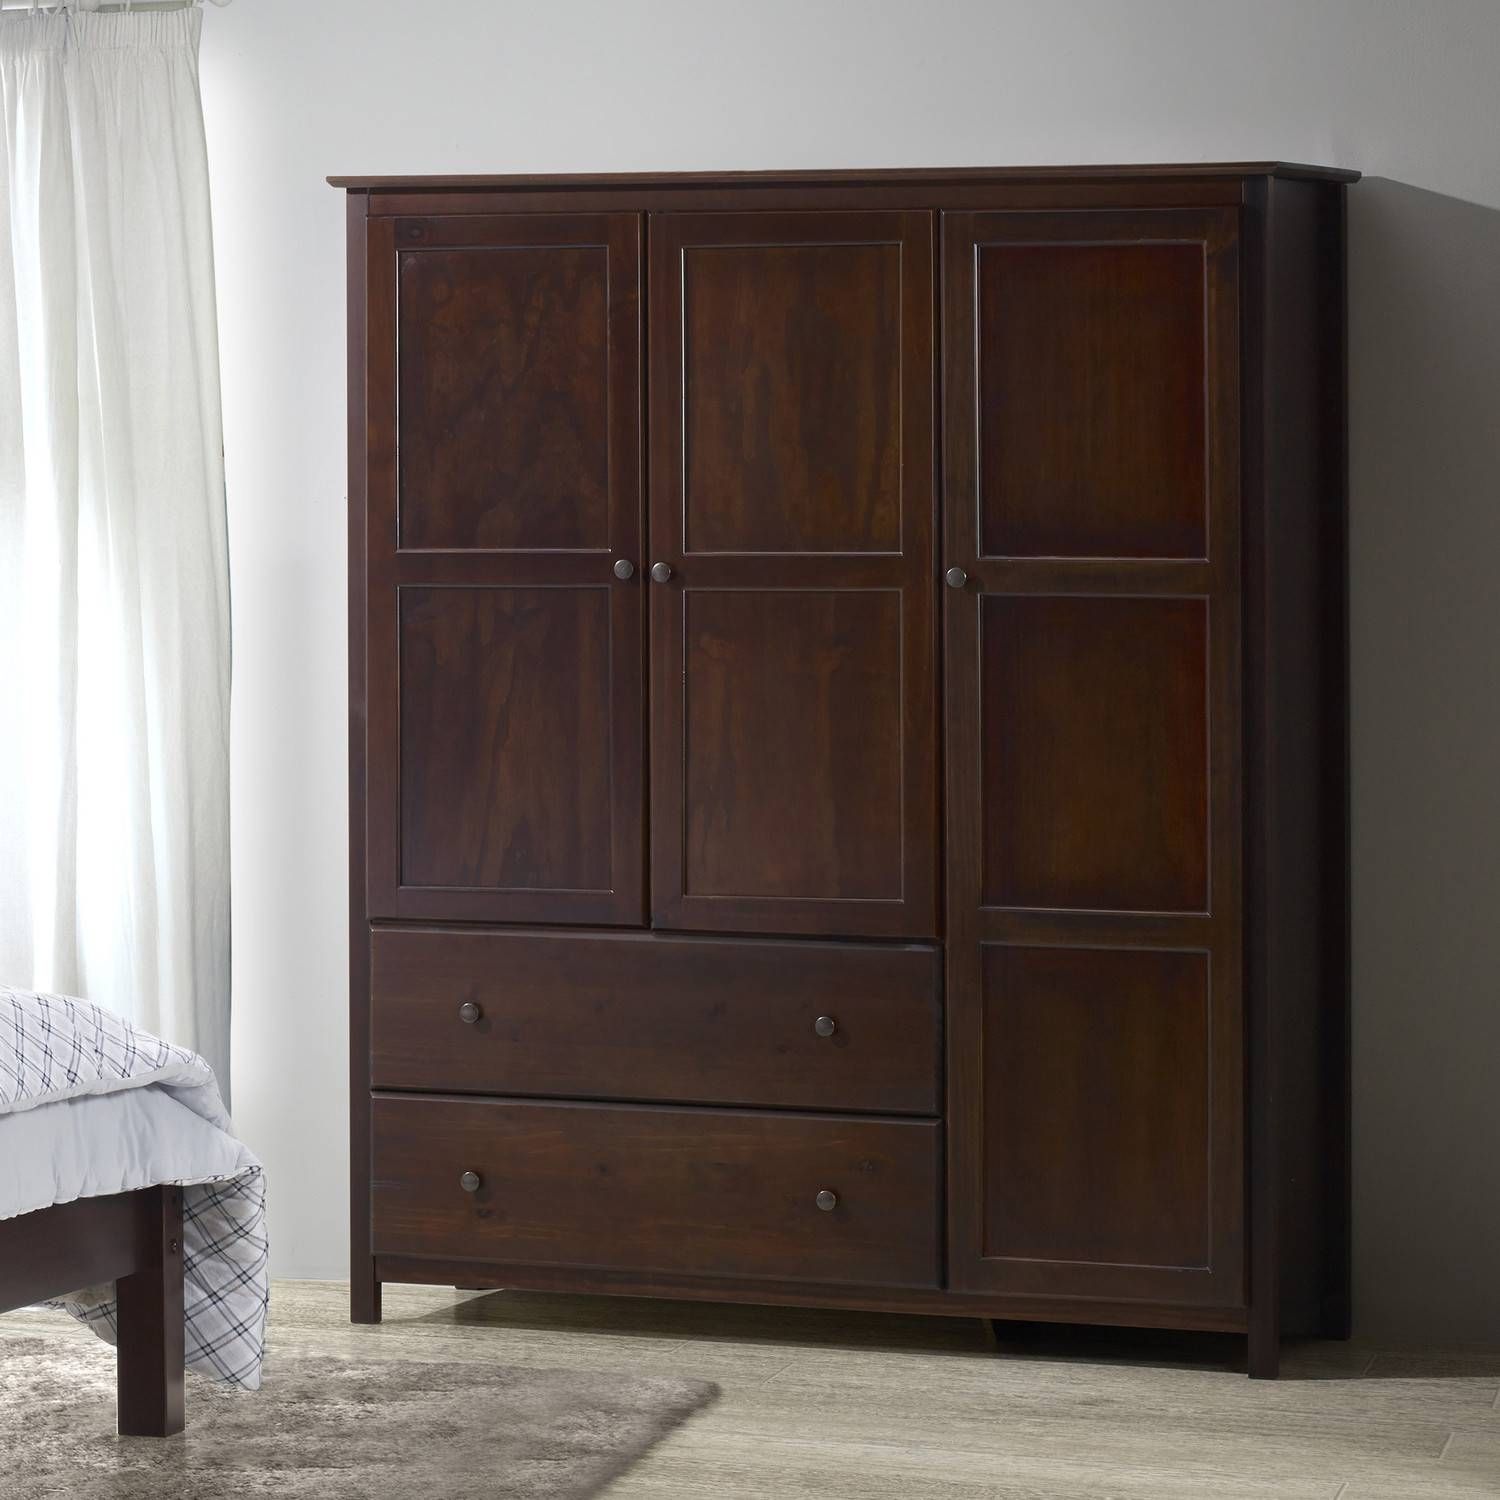 Furniture: Fancy Wardrobe Armoire For Wardrobe Organizer Idea For Dark Wood Wardrobe With Drawers (View 16 of 30)